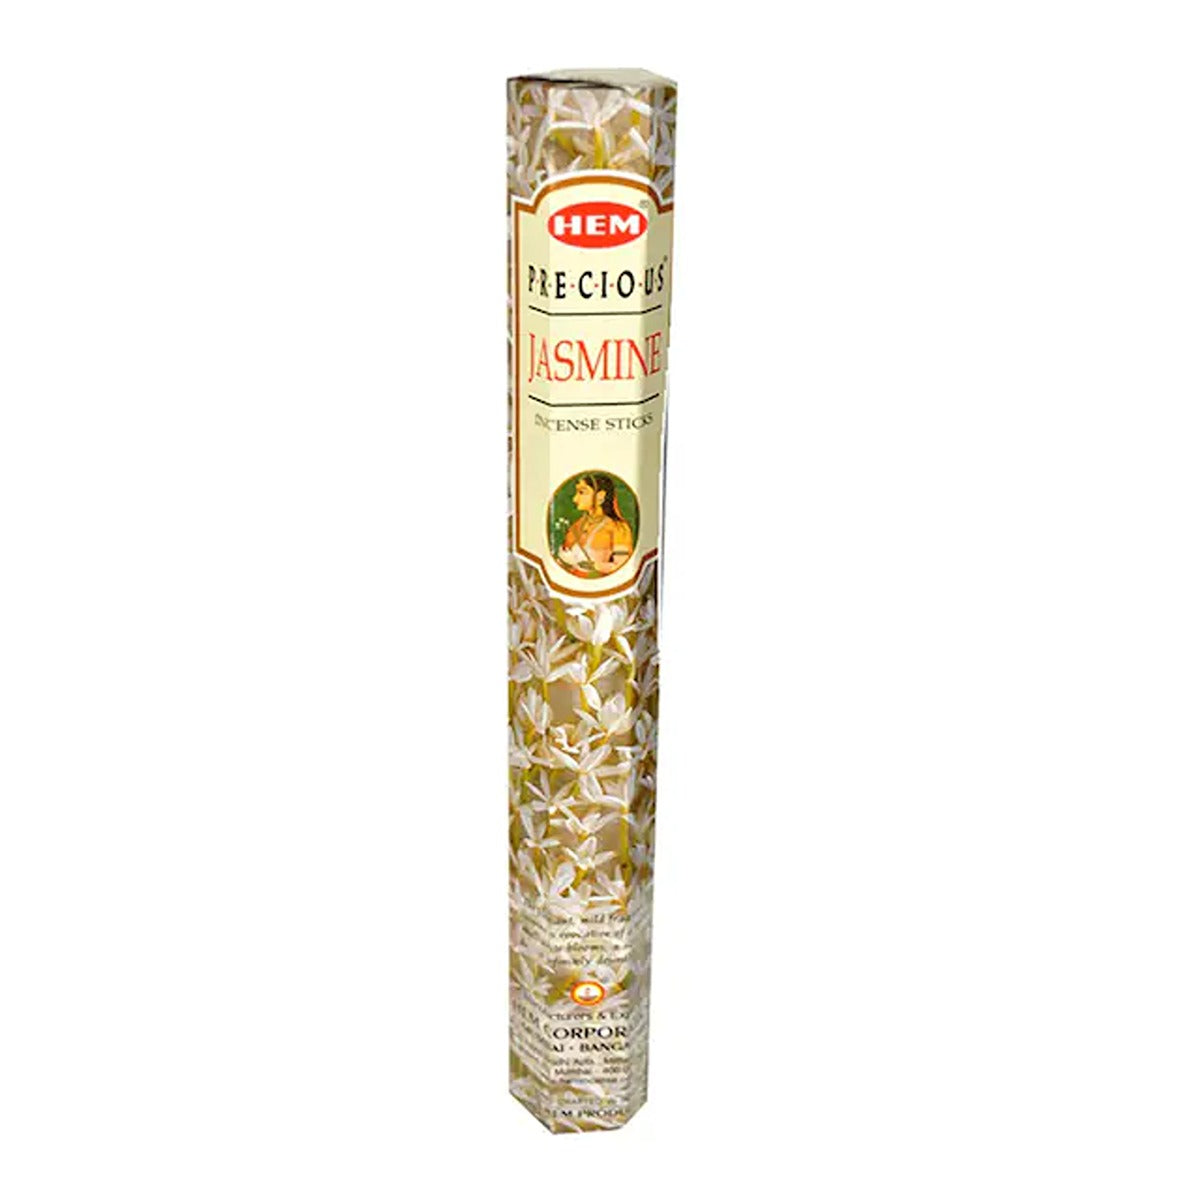 HEM - Jasmine Incense - 20 Stick - Continental Food Store